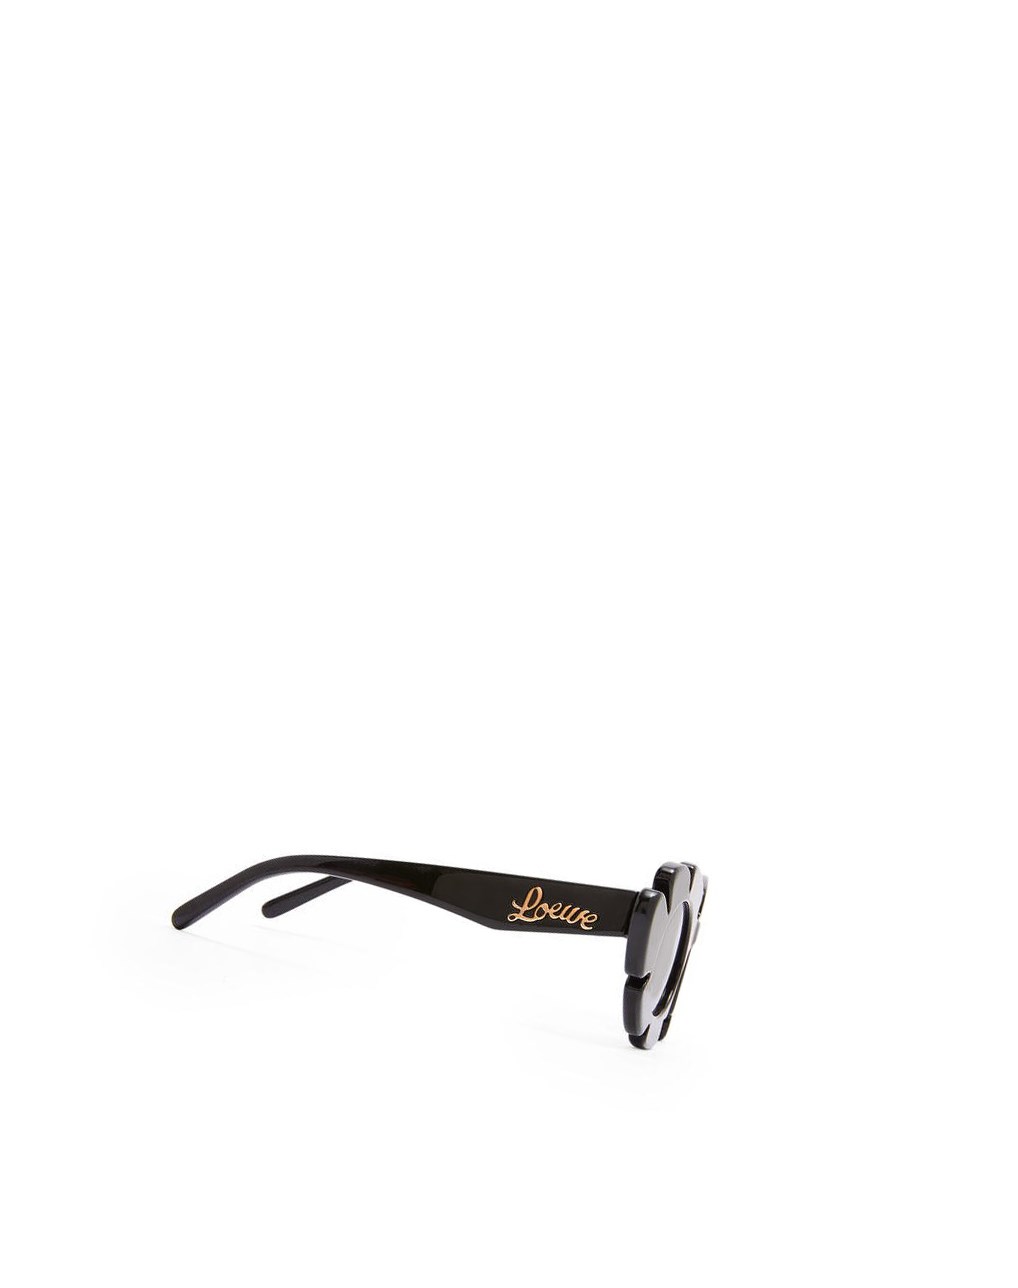 Loewe Flower sunglasses in injected nylon Black | WJ7524869